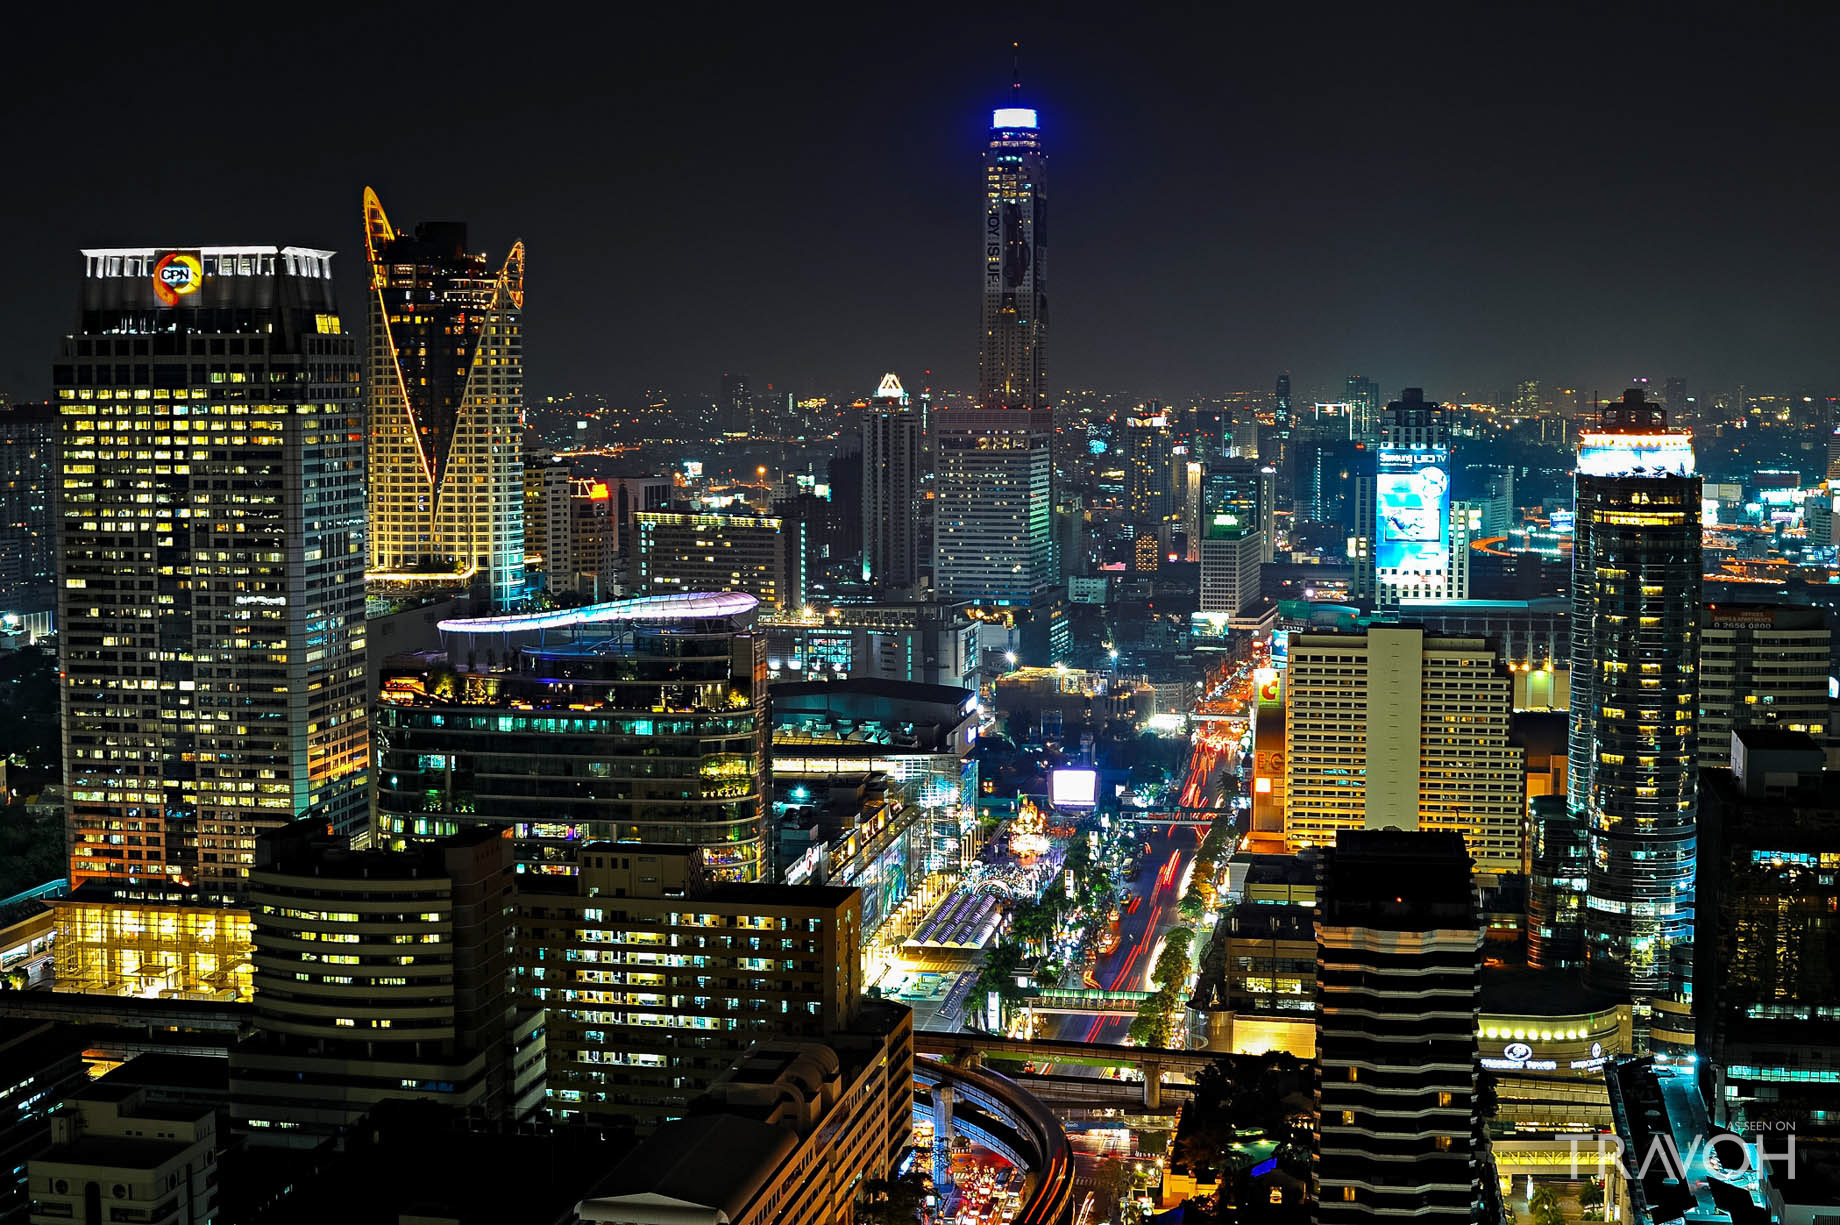 St. Regis Luxury Hotel Bangkok, Thailand – City View at Night | TRAVOH